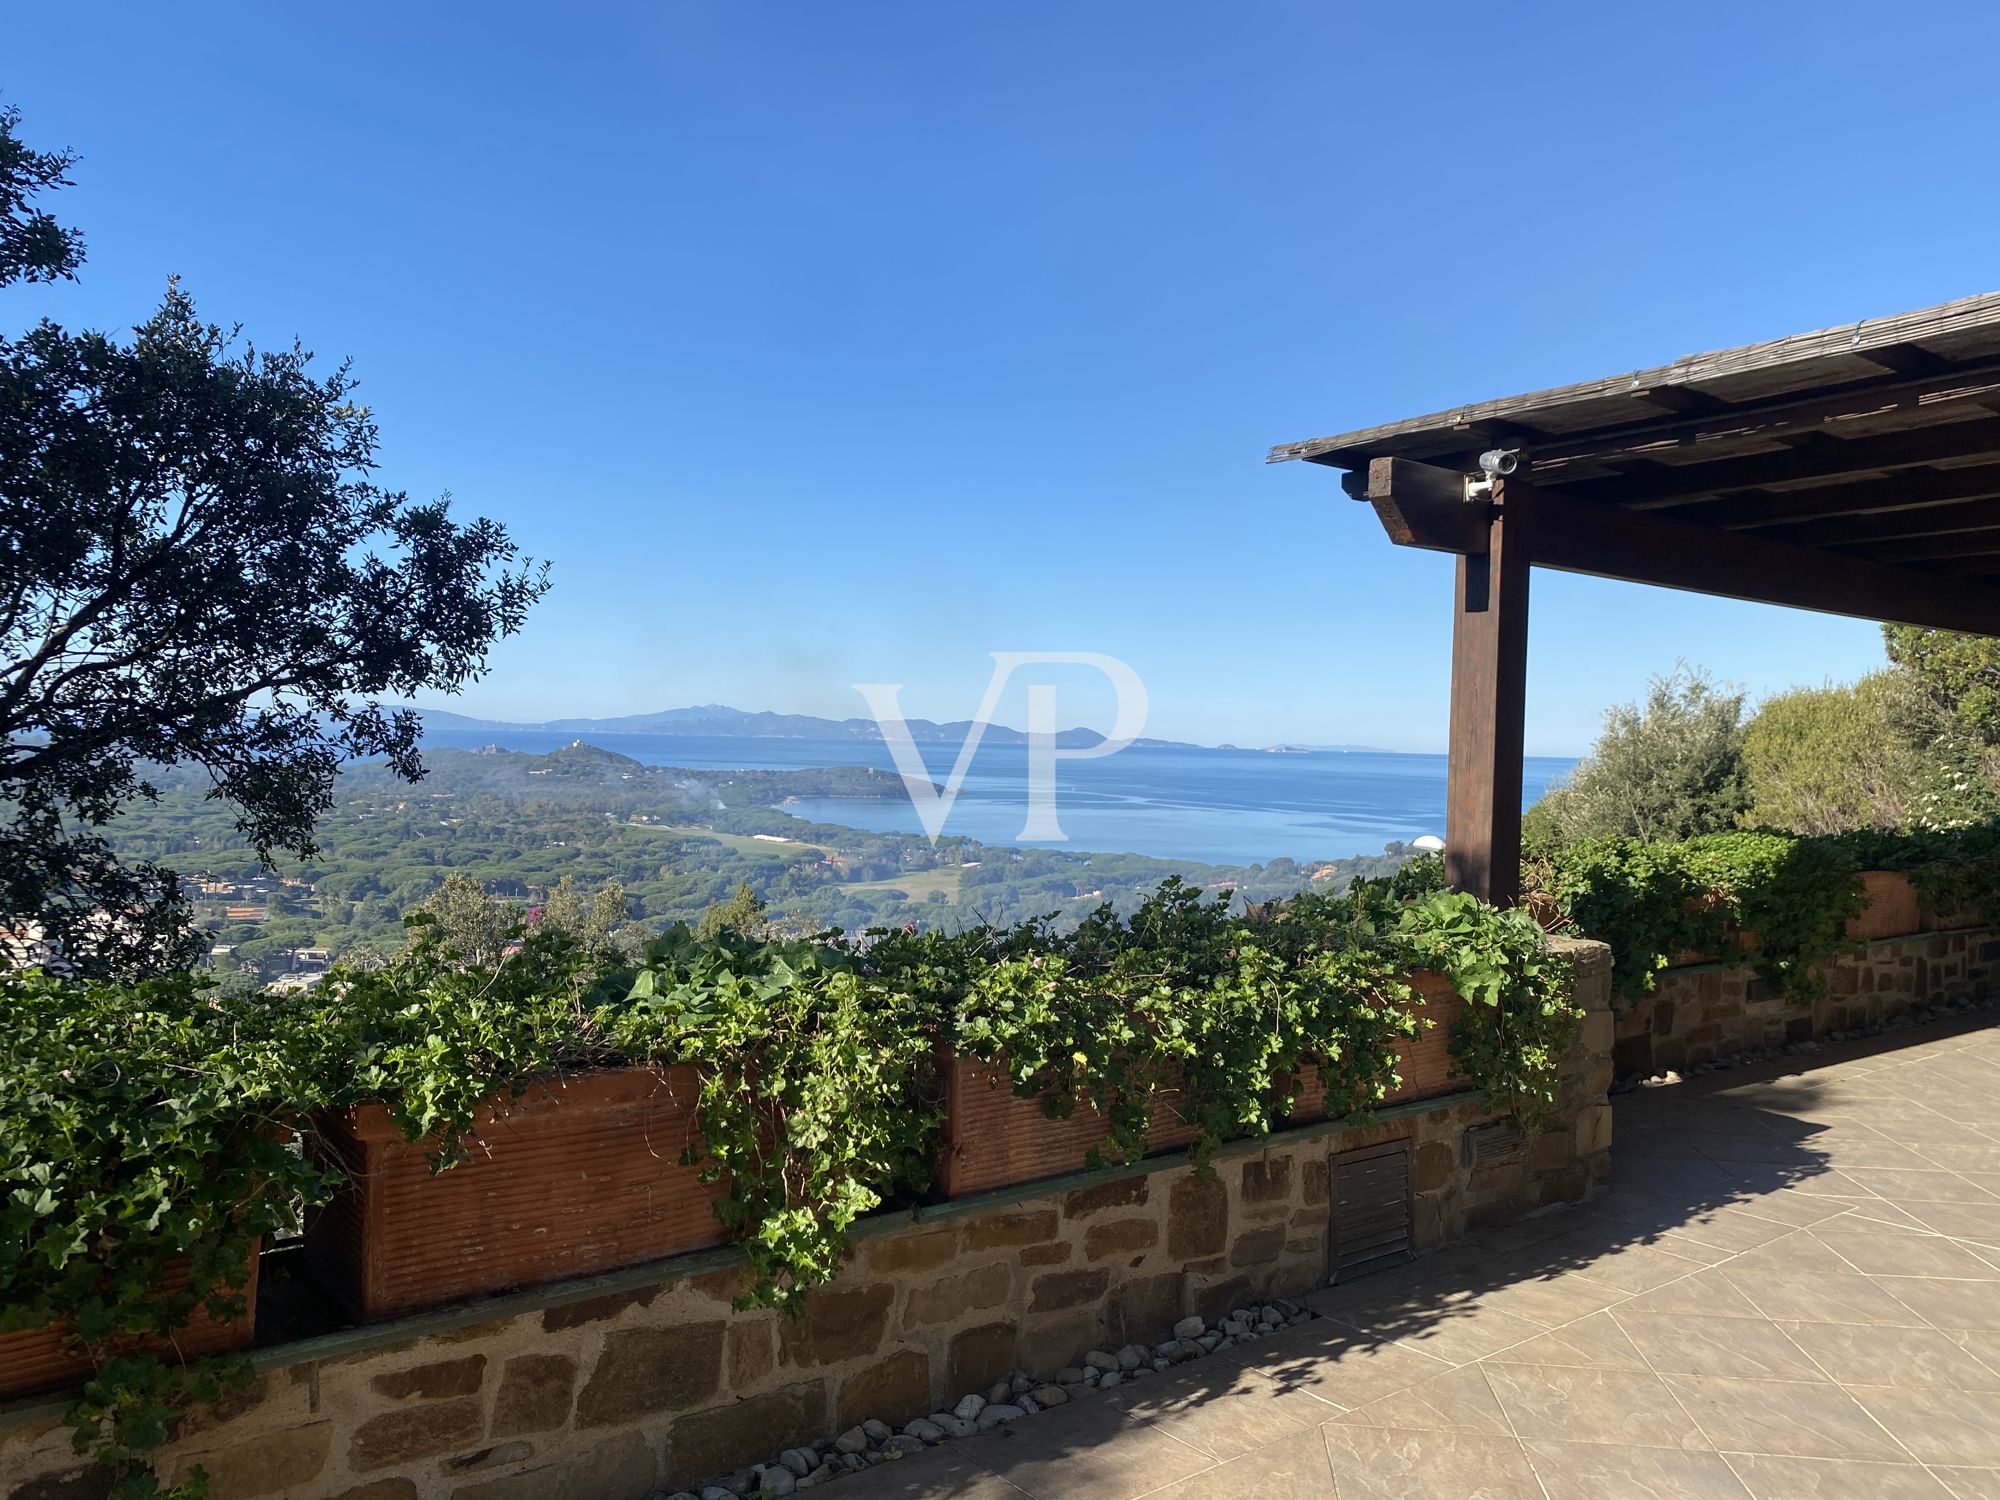 Villa esclusiva con vista panoramica mozzafiato a 180° a Punta Ala